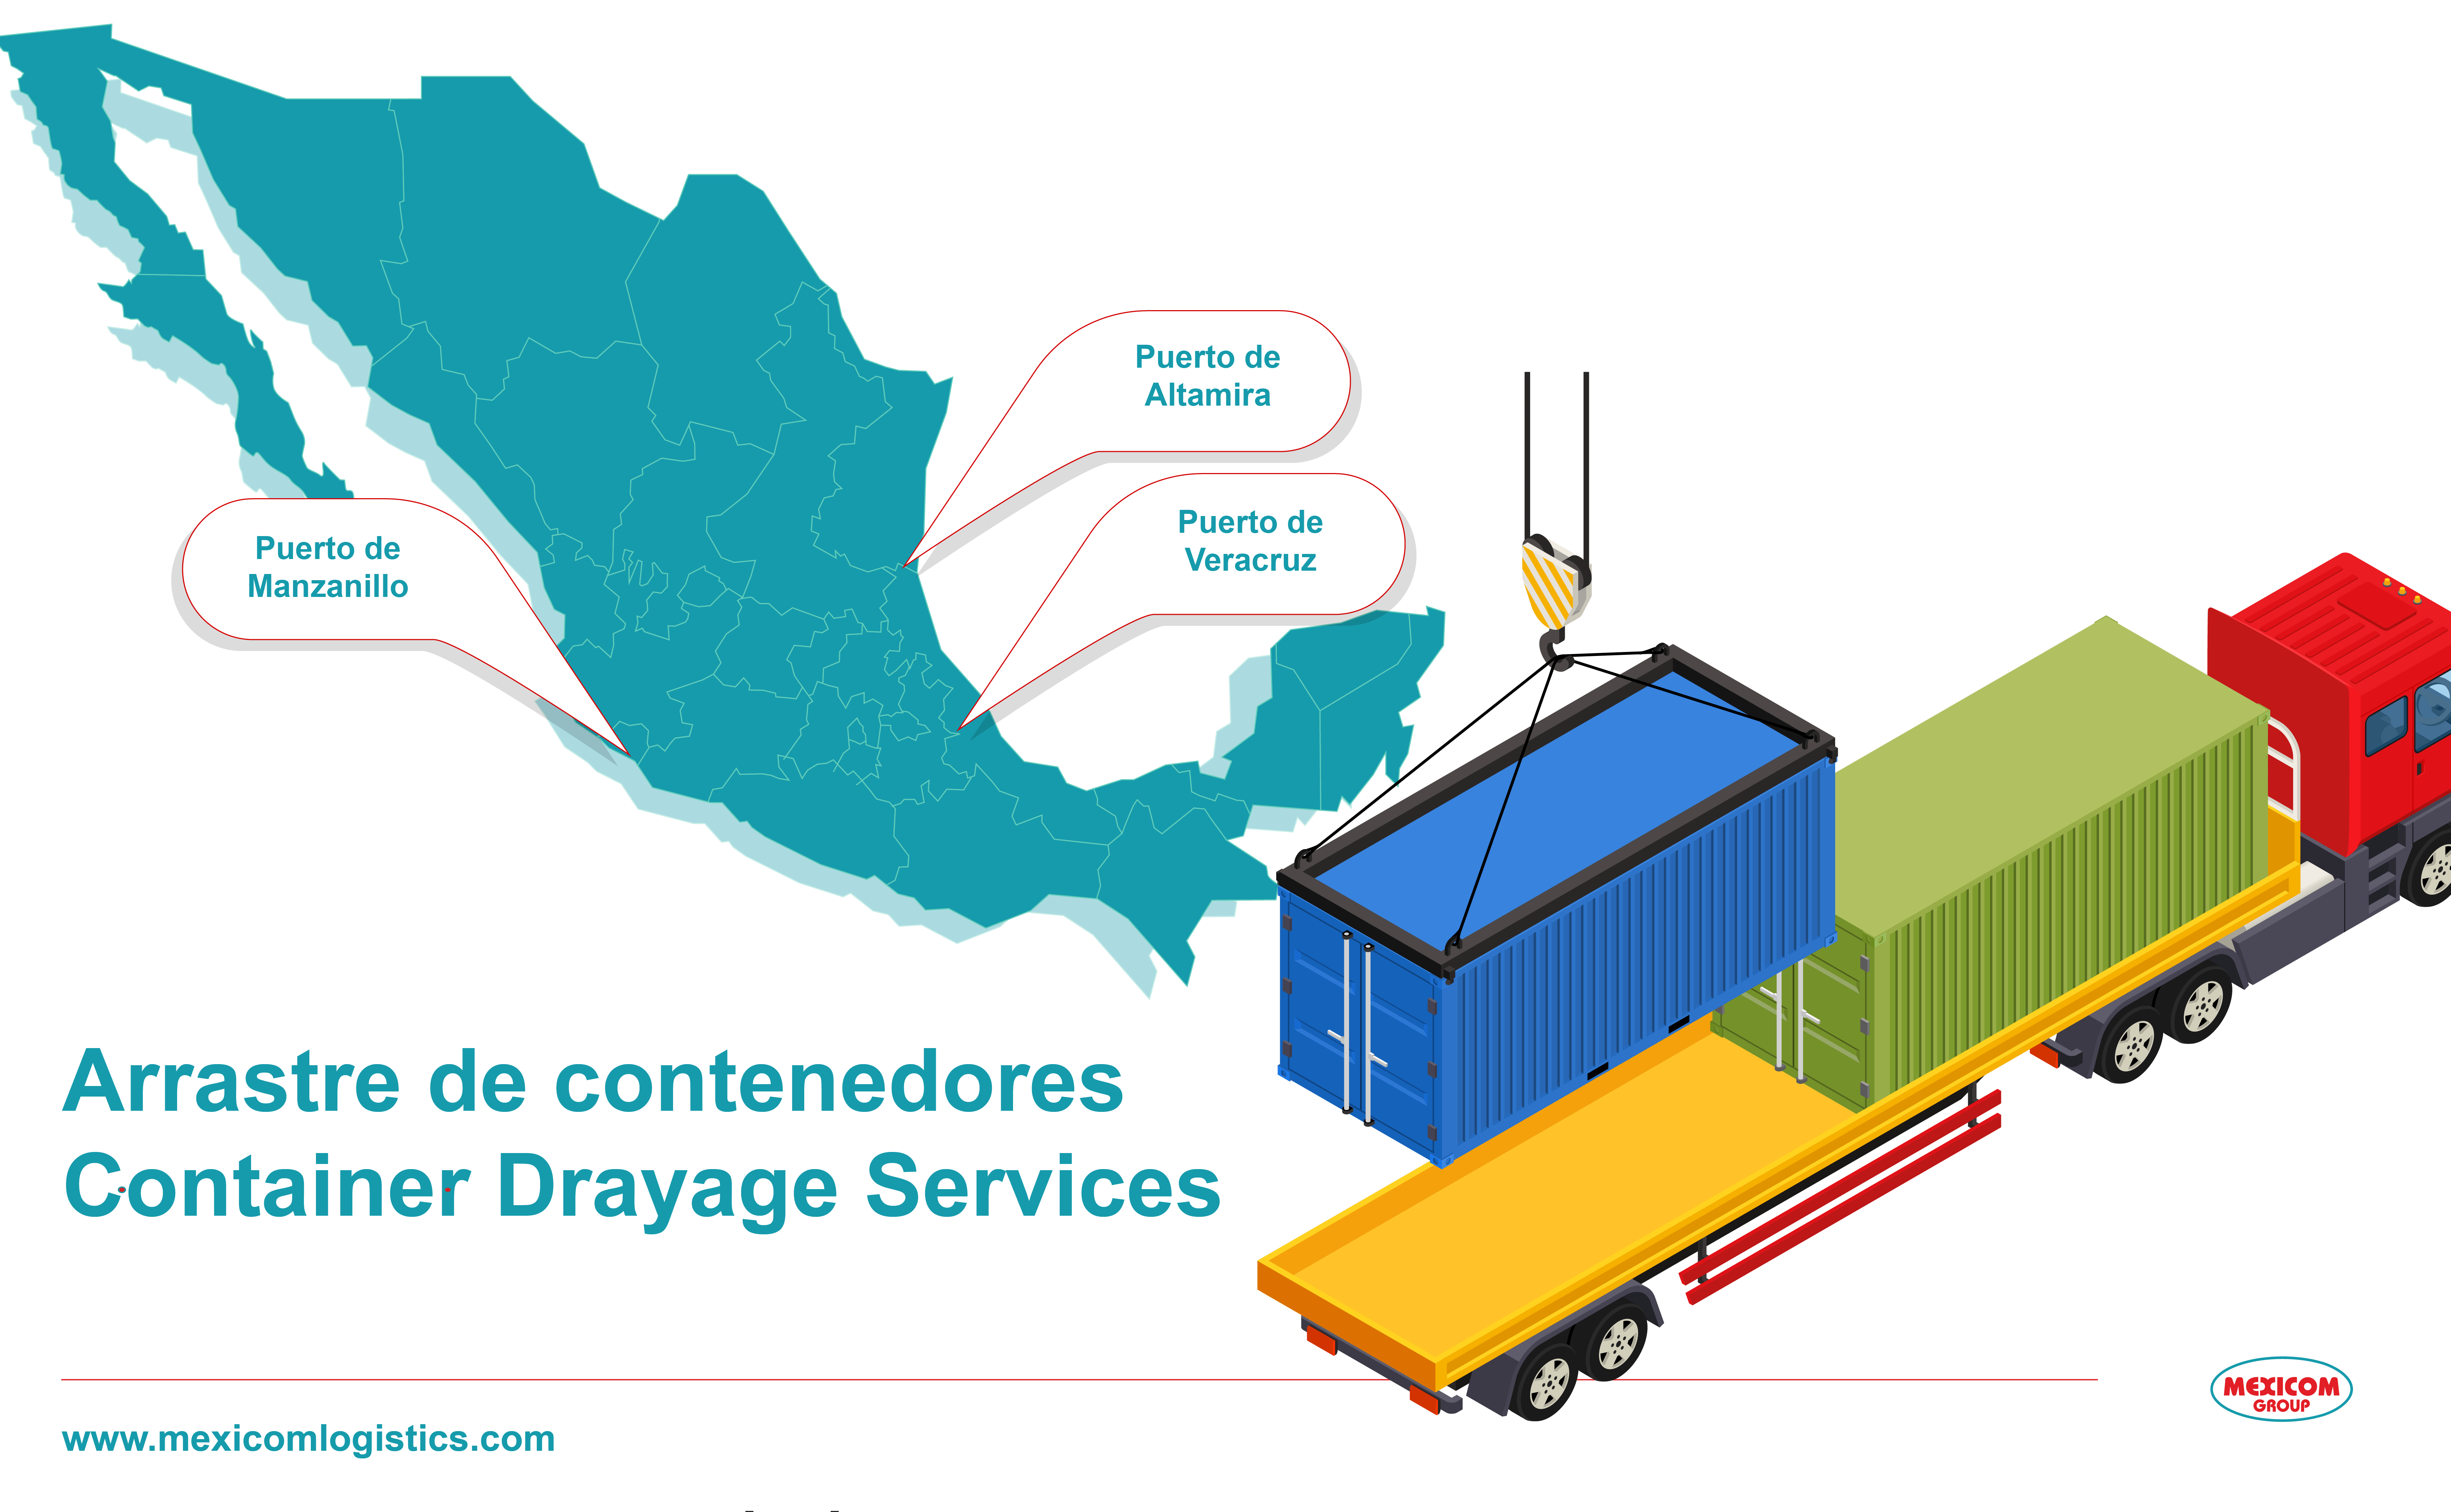 Arrastre de contenedores transporte de carga en contenedores